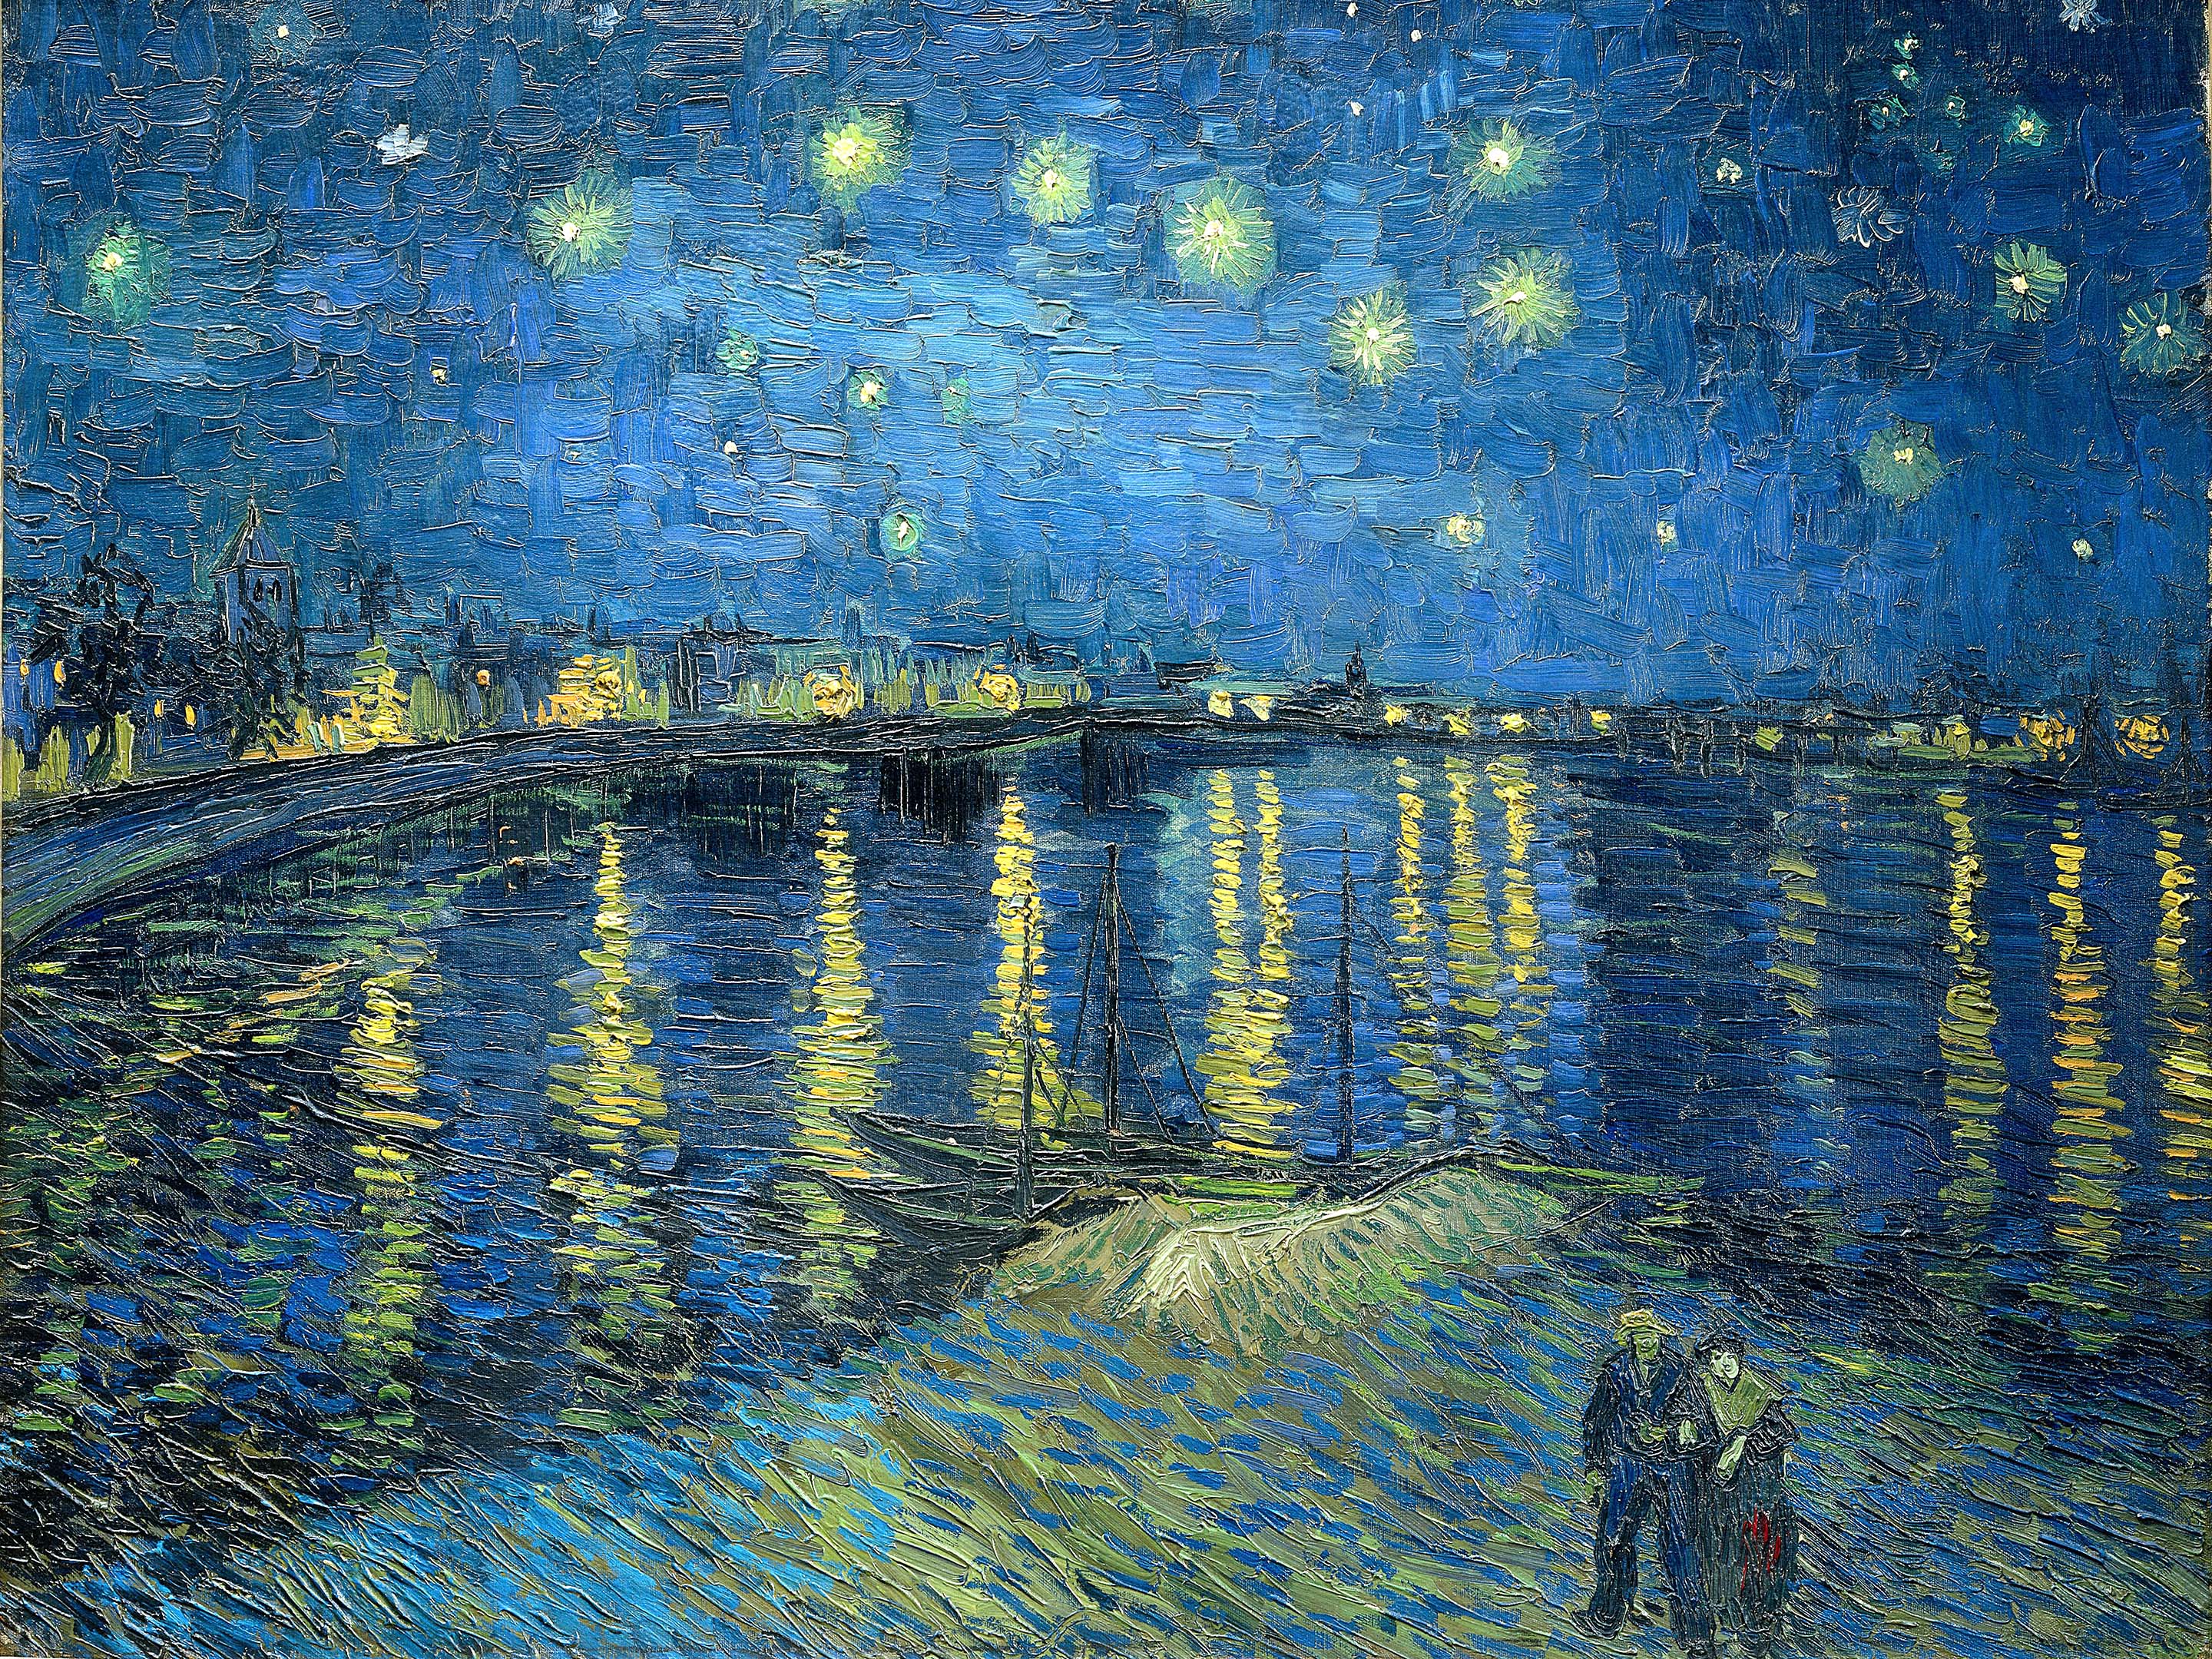 Van Gogh Vincent - Starry Night Over the Rhone